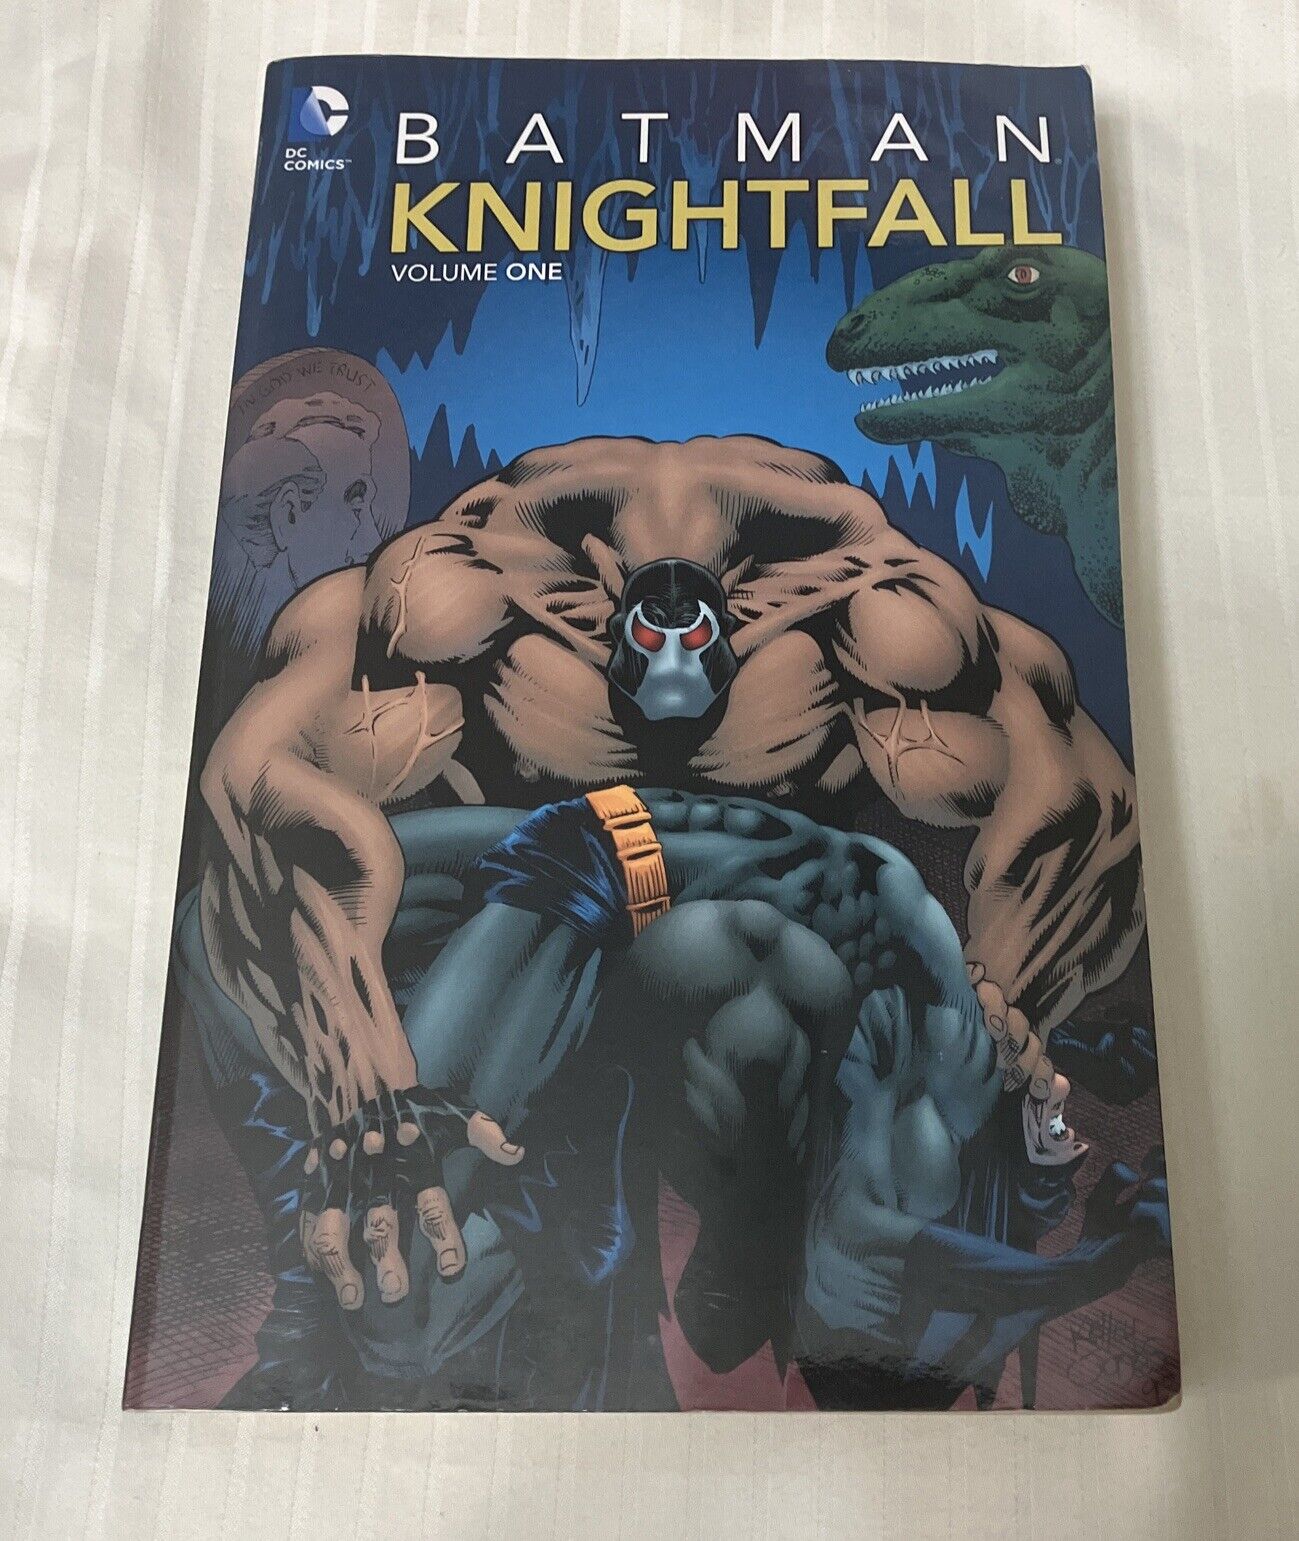 Batman: Knightfall Vol. 1 by D. C. Comics (2012, Trade Paperback)